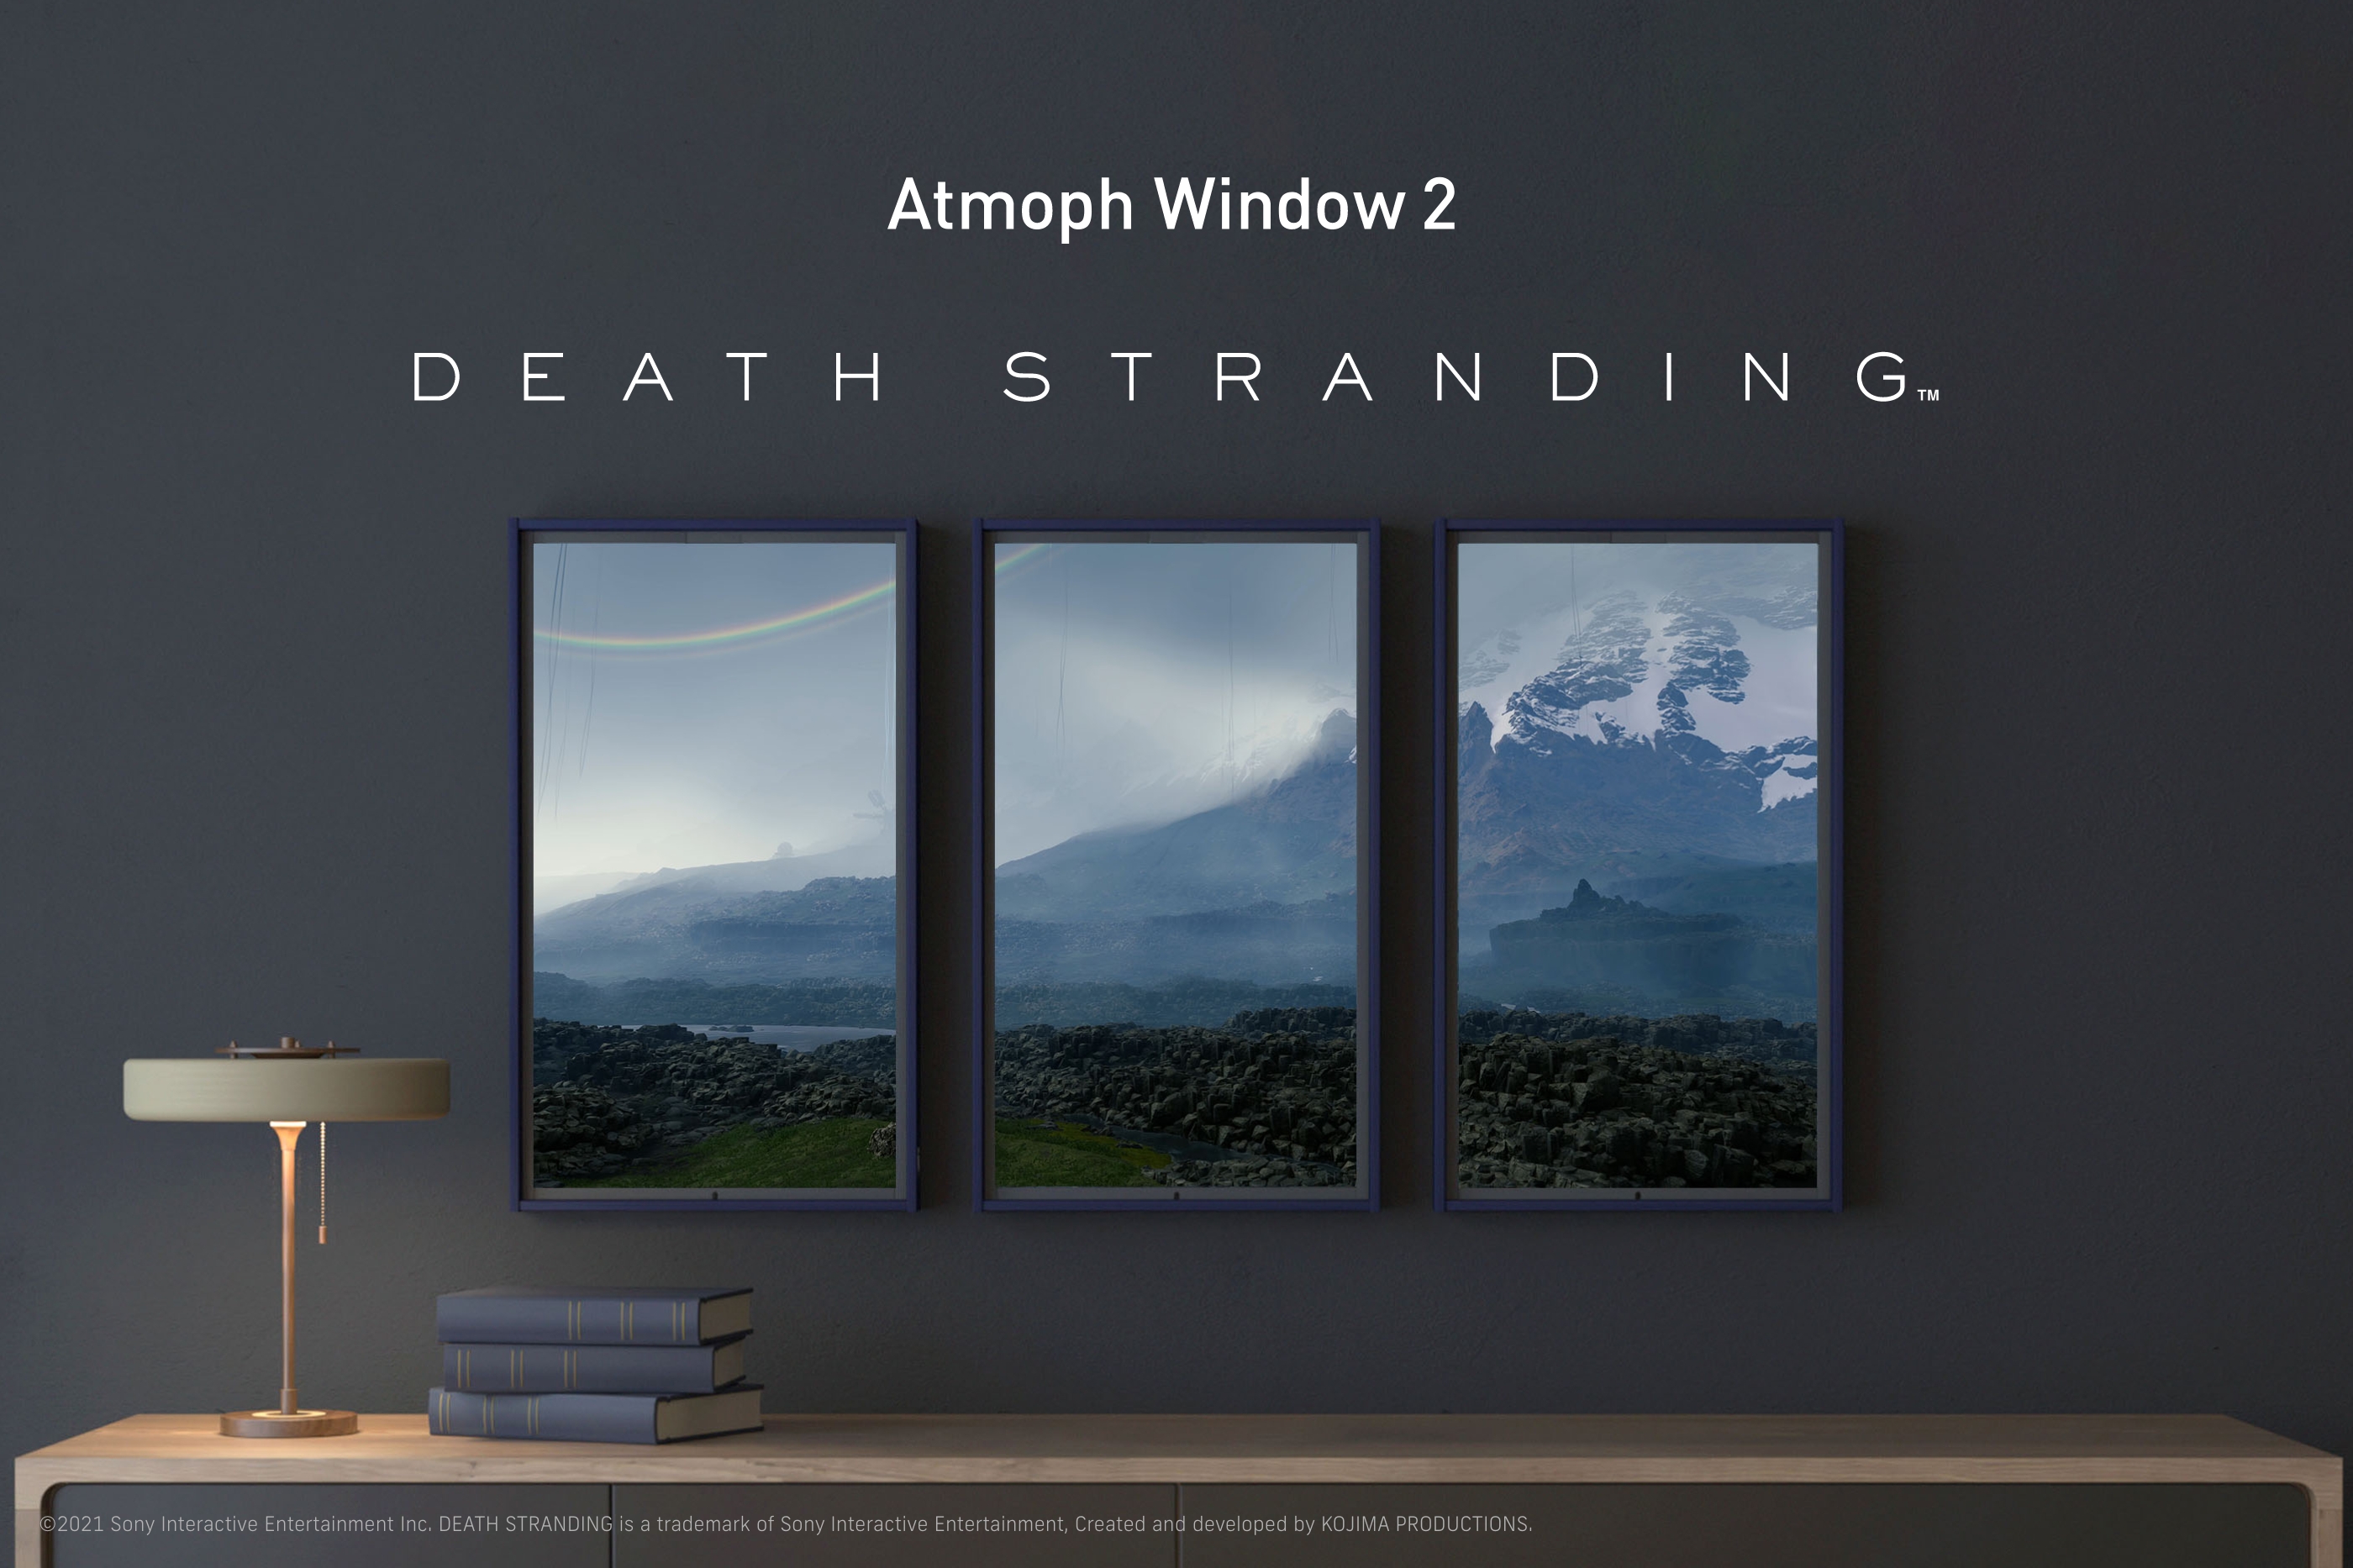 DEATH STRANDING（デス・ストランディング）』の世界がAtmoph Window 2 